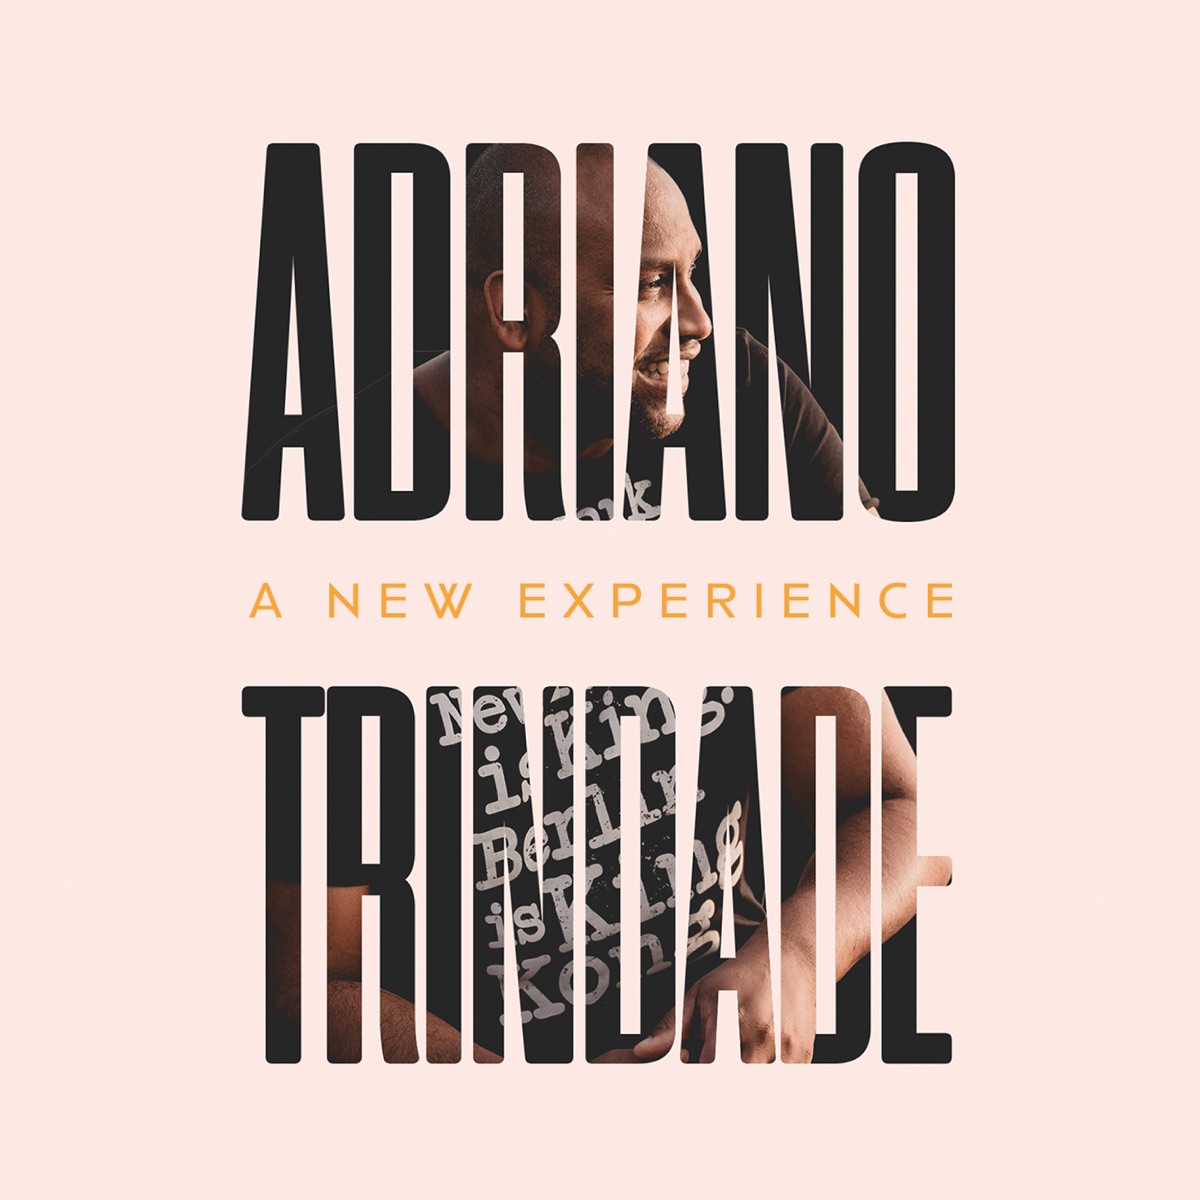 Adriano Trindade